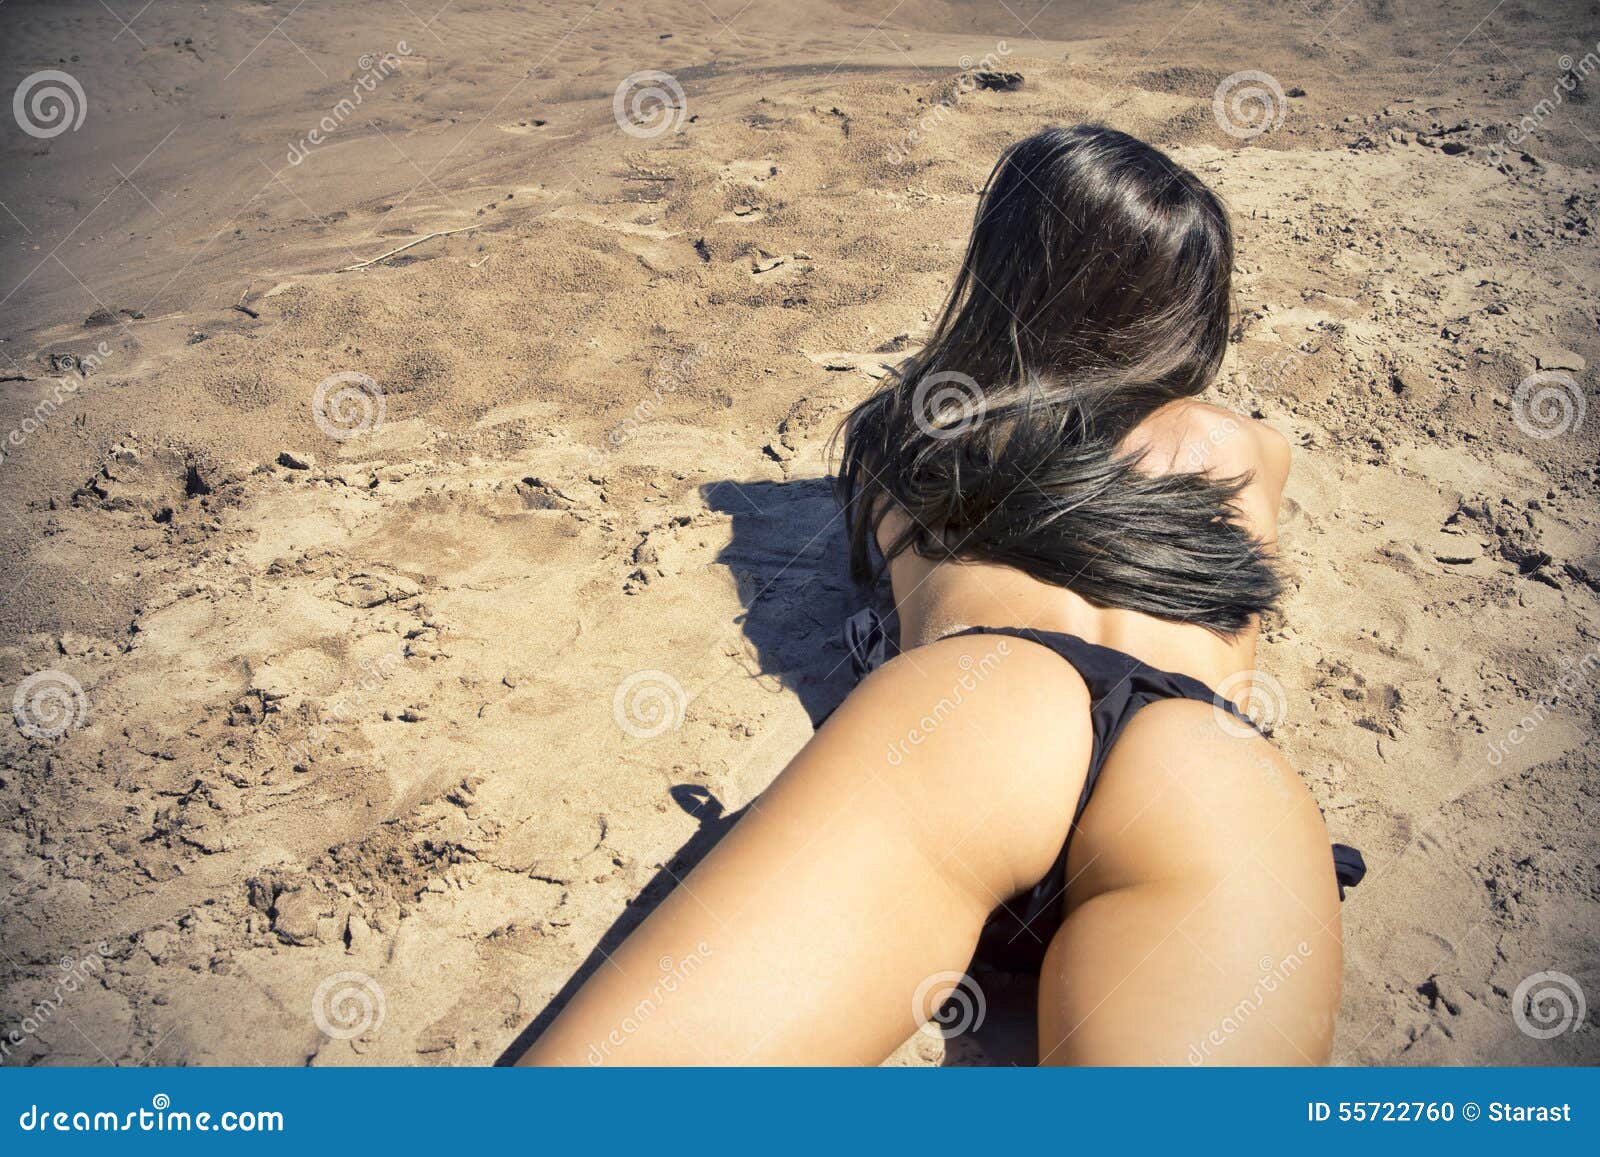 Beach Girls Sunbathing Topless - Beautiful Woman Sunbathing Topless on a Beach Stock Photo - Image of body,  skin: 55722760